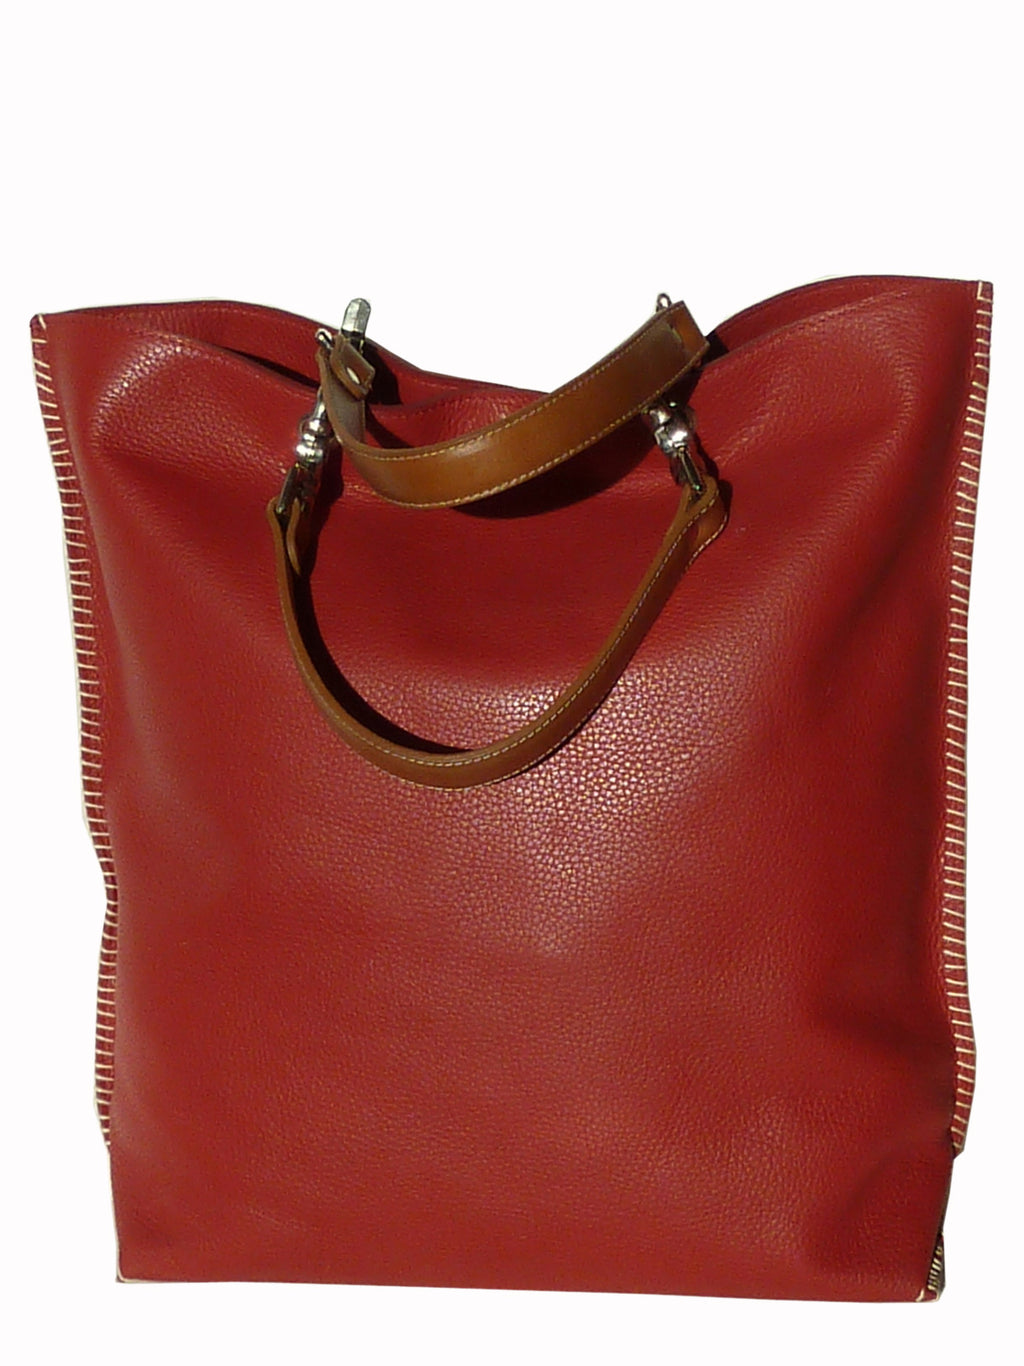 Gajumbo Tote Bag Pebble Grain Leather Red